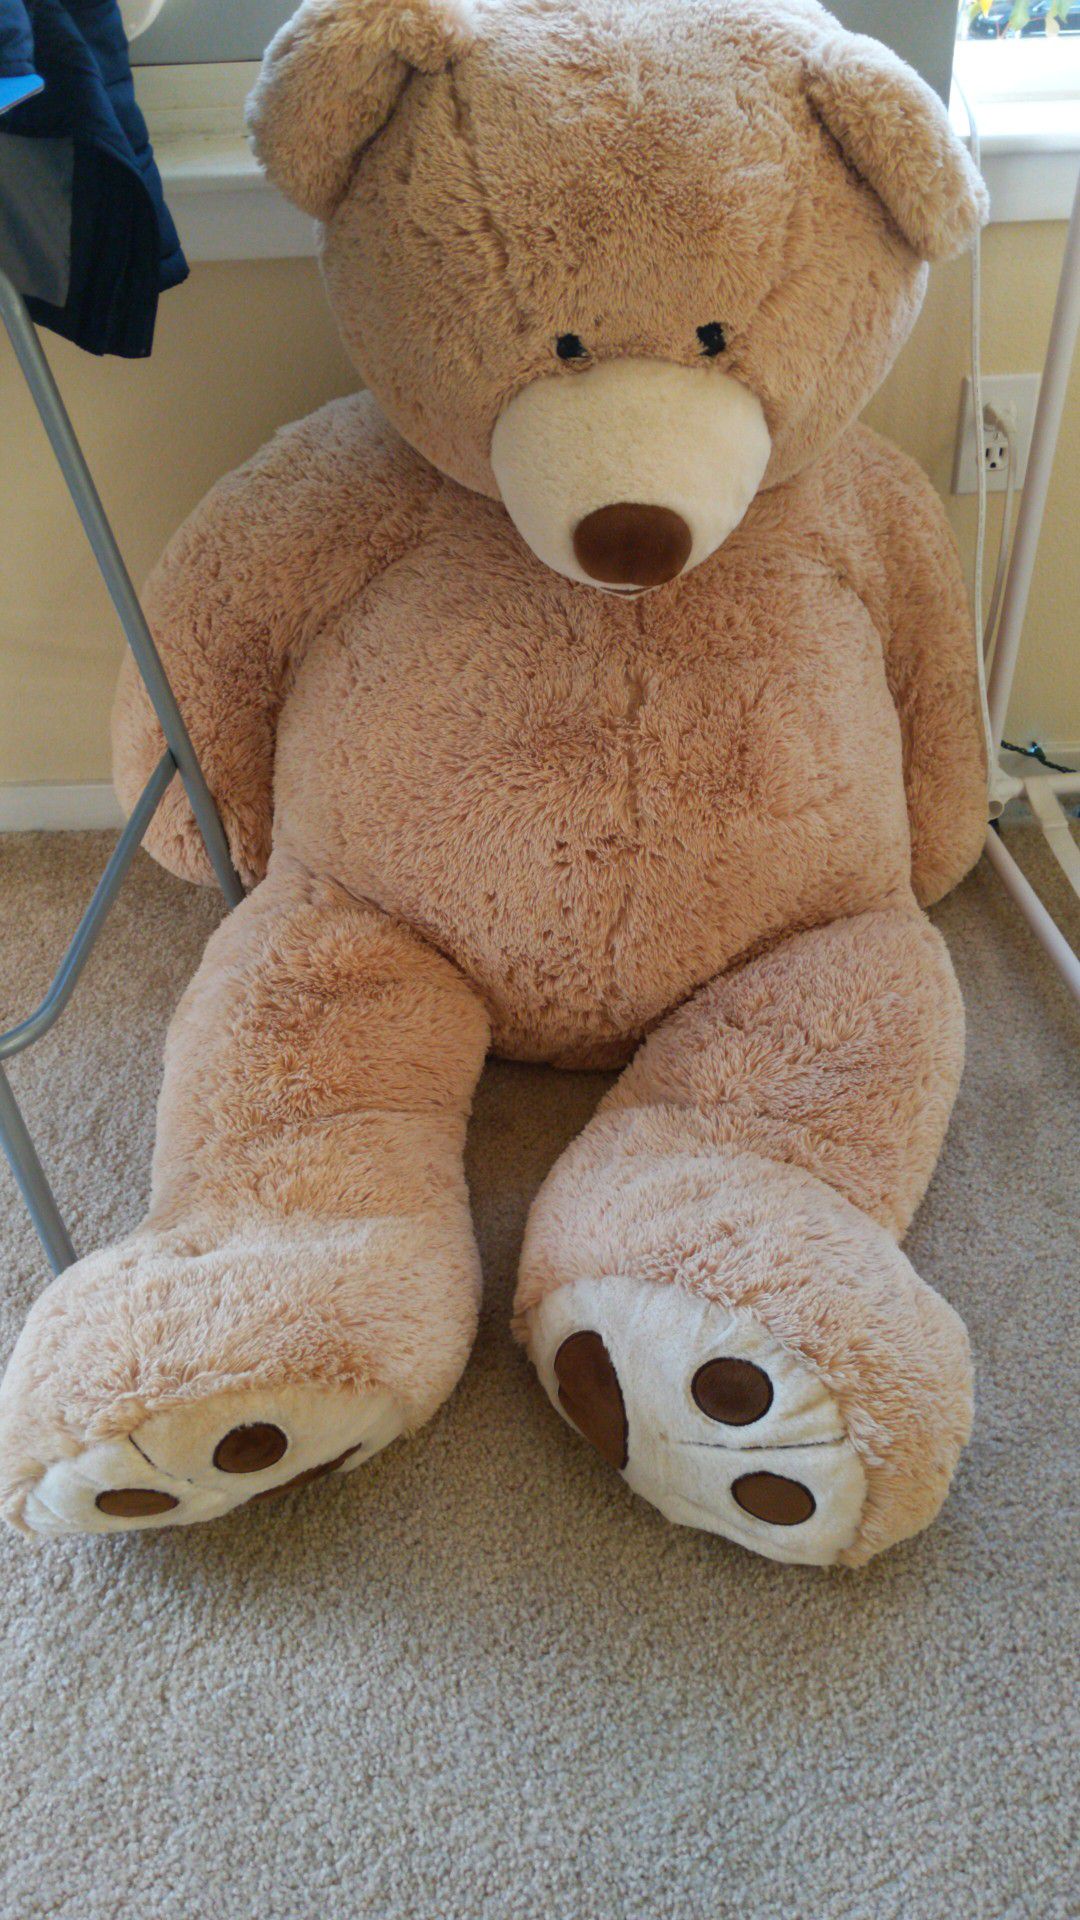 Brand new huge teddy bear.